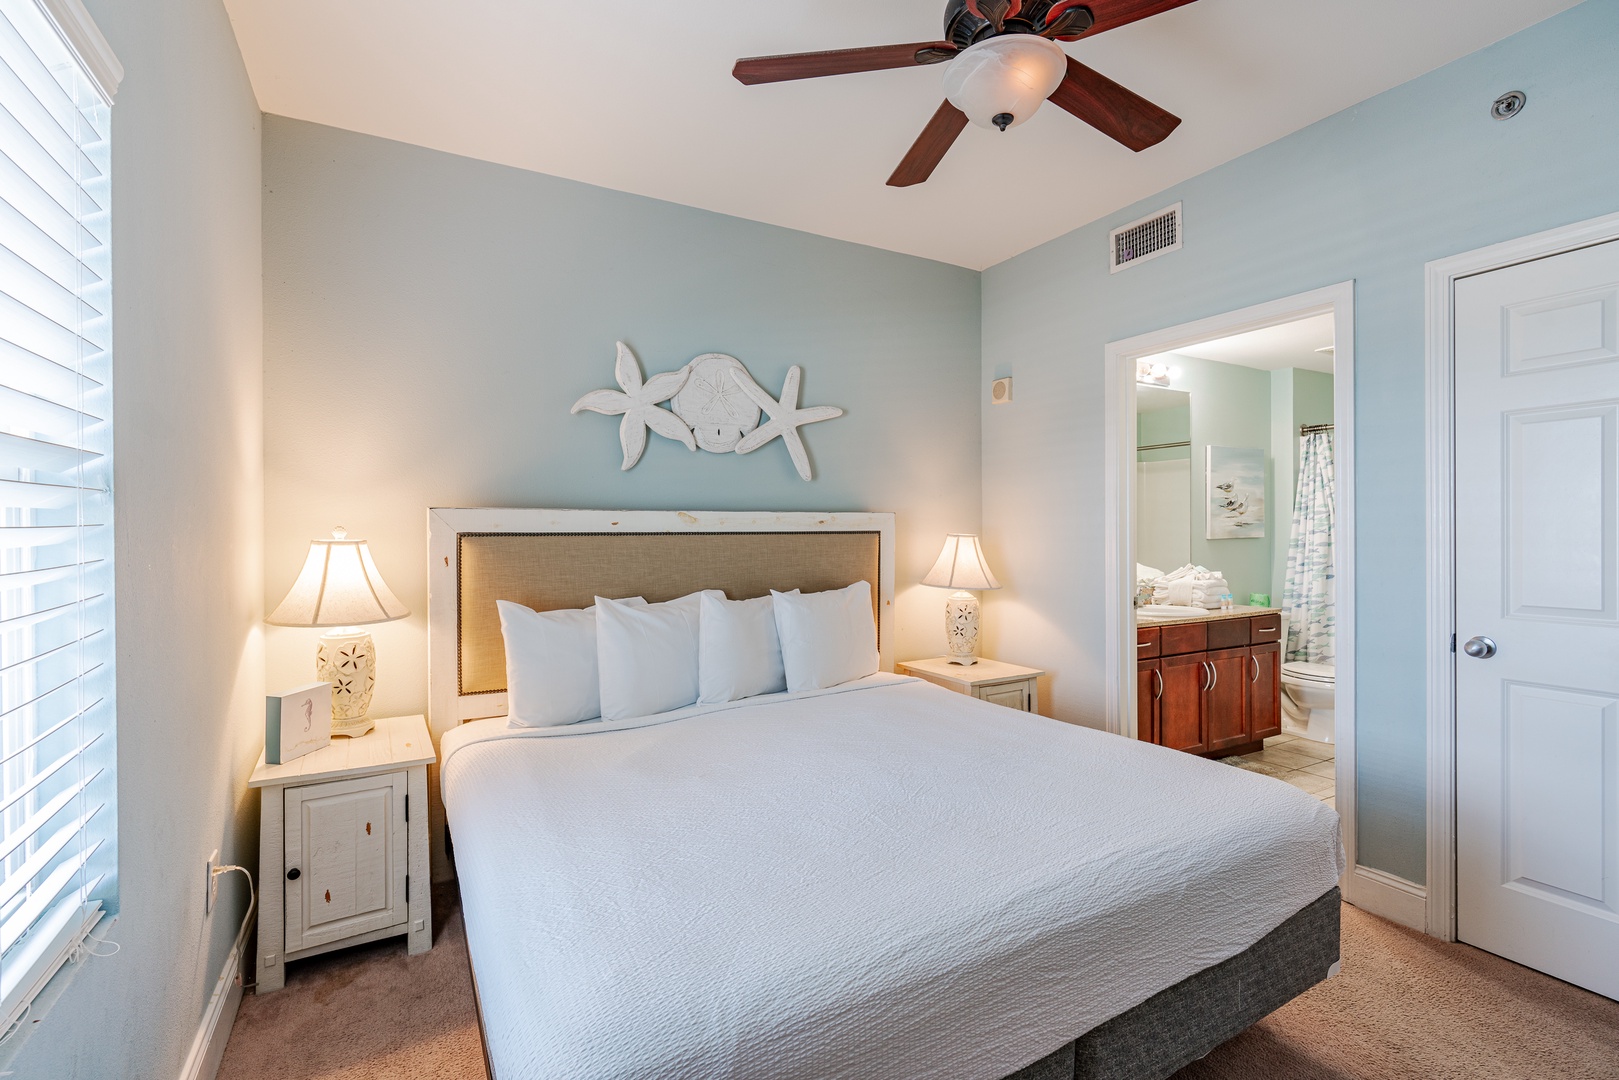 The king suite offers a private en suite, Smart TV, & ceiling fan